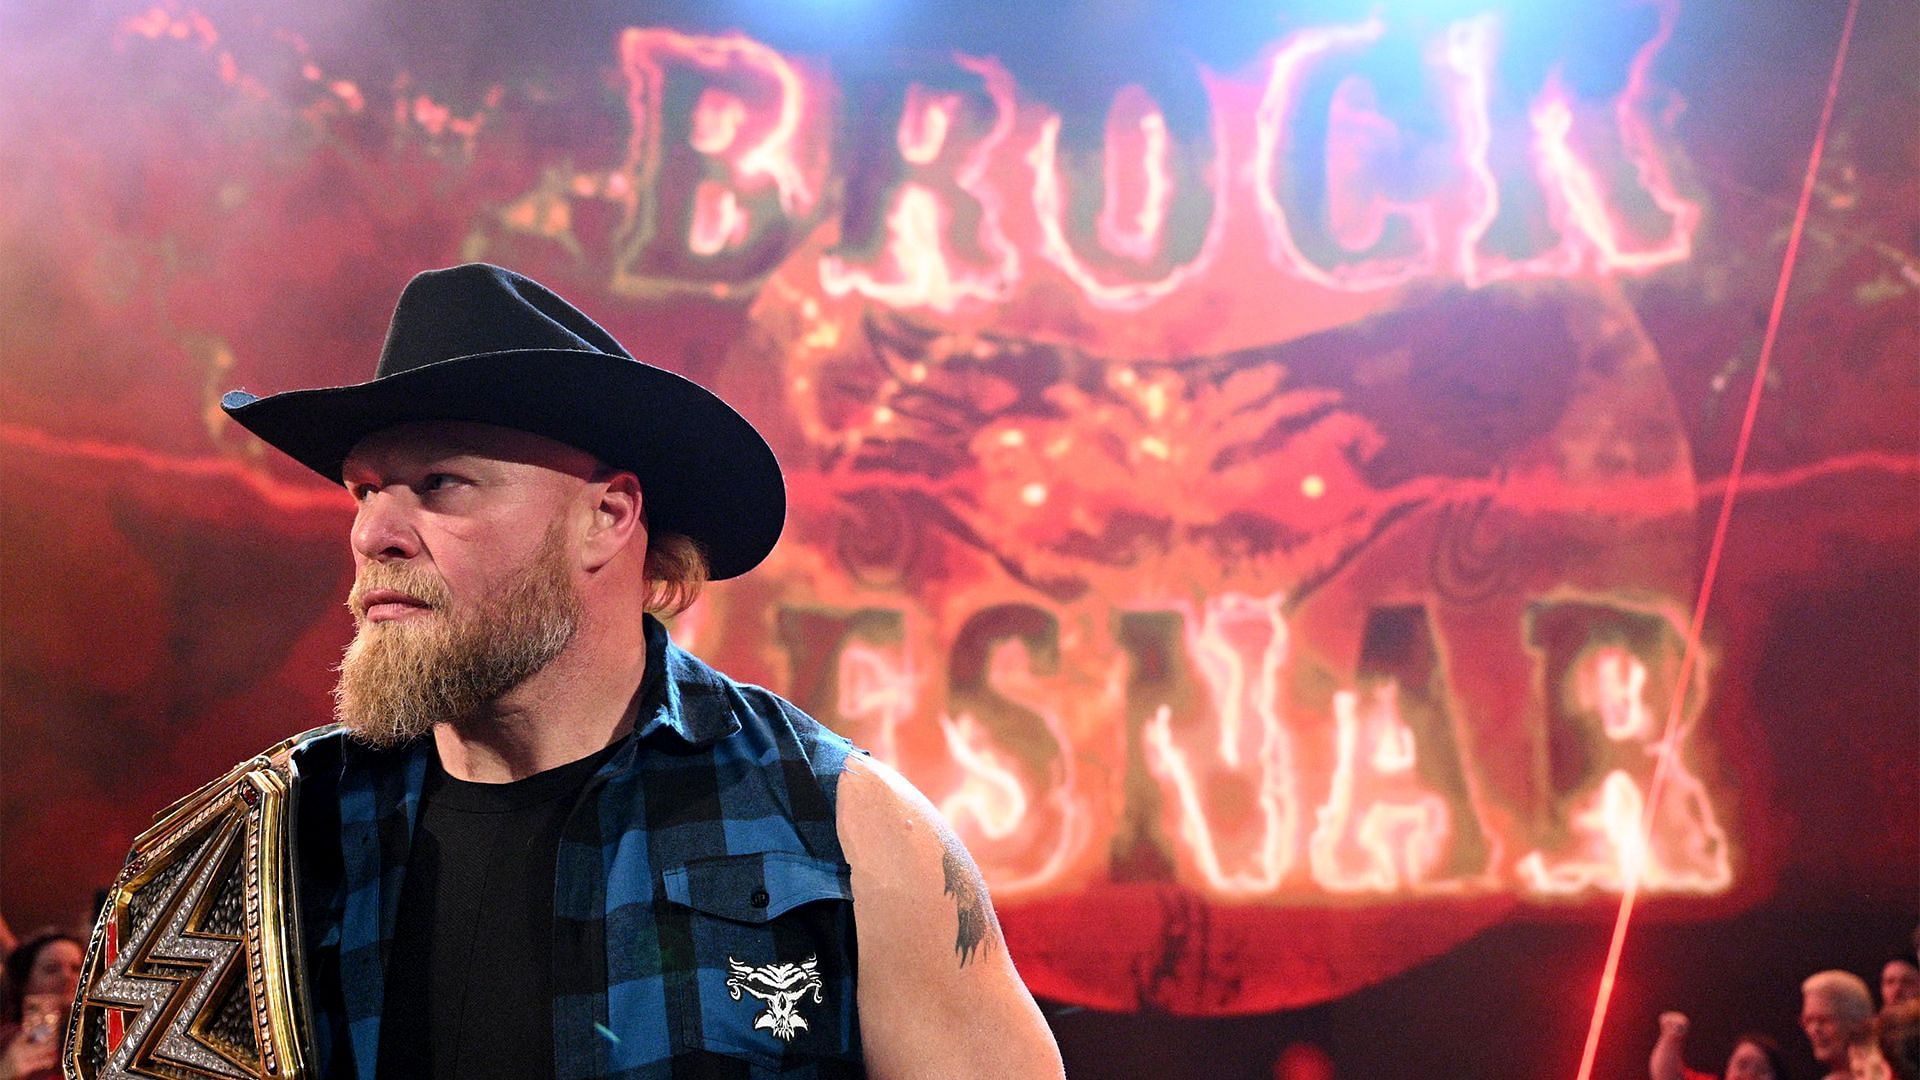 Brock Lesnar will be present at SummerSlam